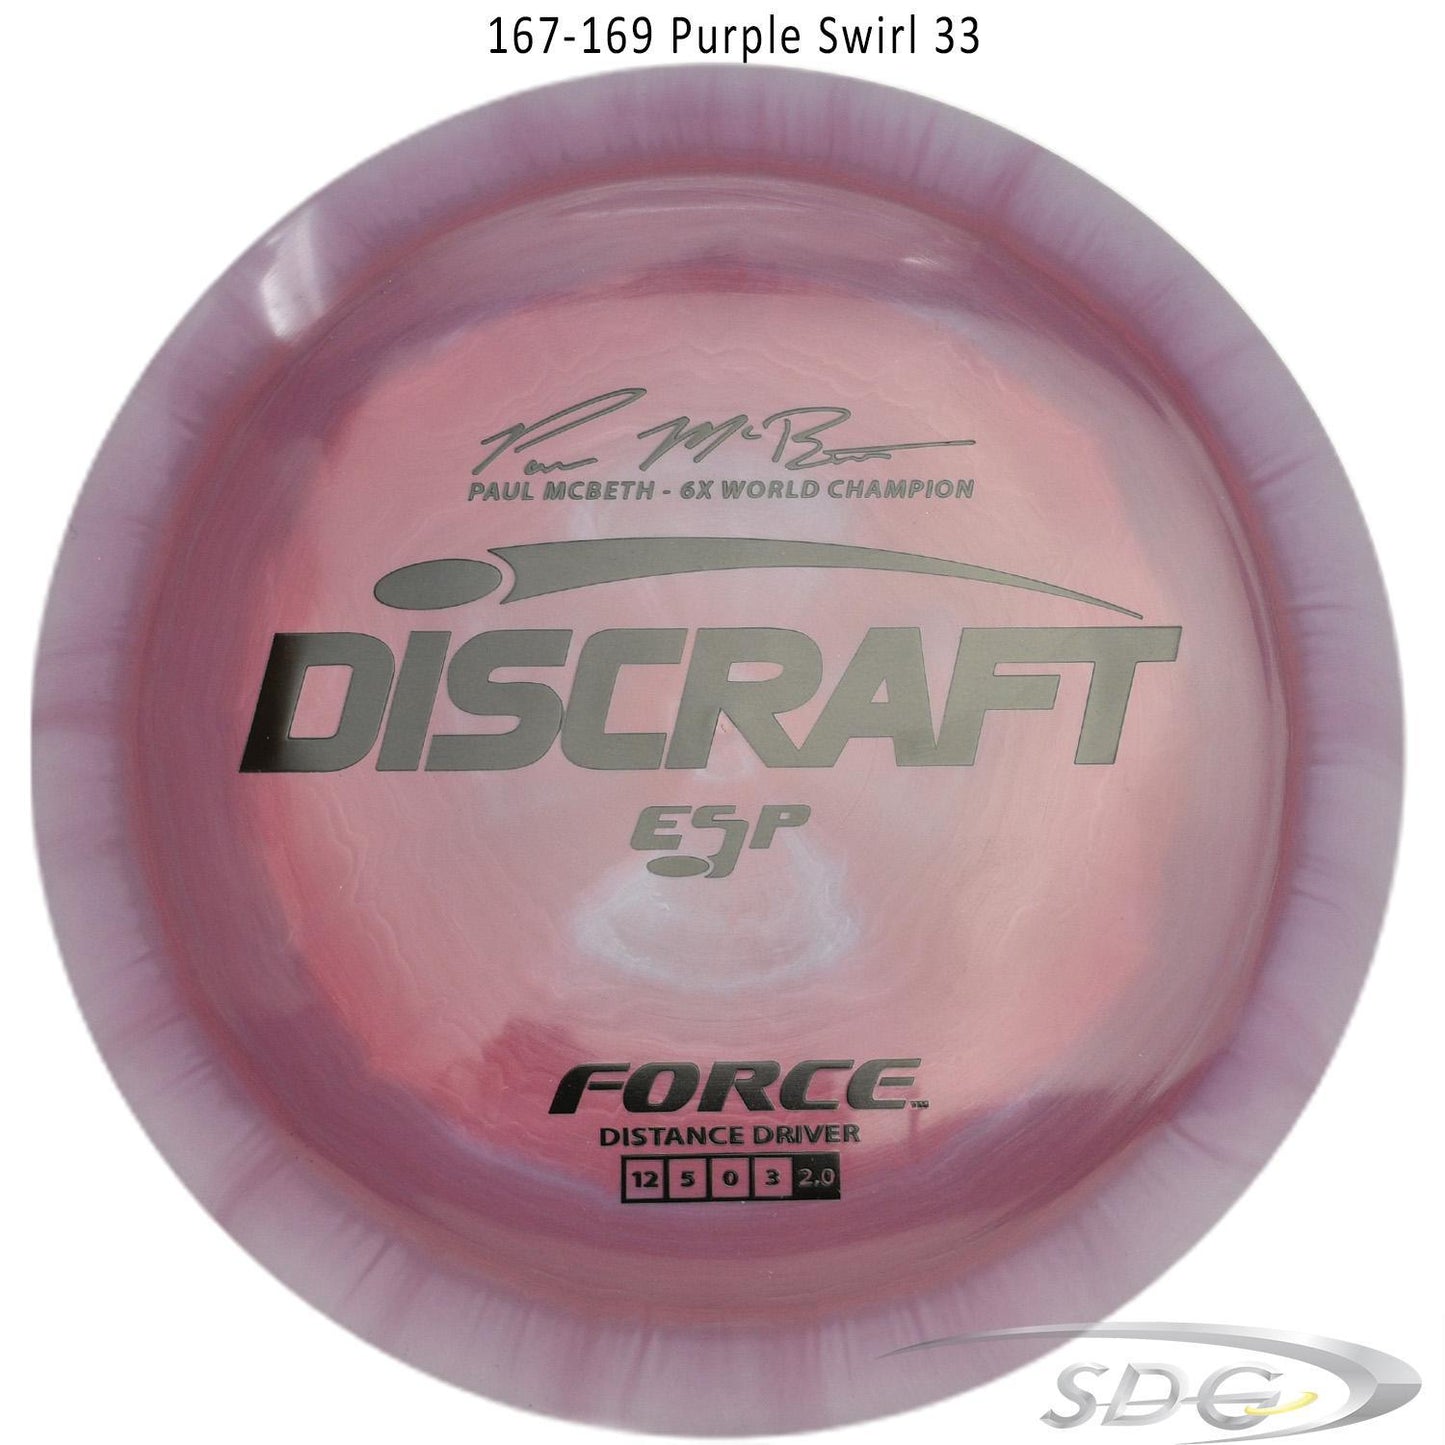 discraft-esp-force-6x-paul-mcbeth-signature-disc-golf-distance-driver-169-160-weights 167-169 Purple Swirl 33 